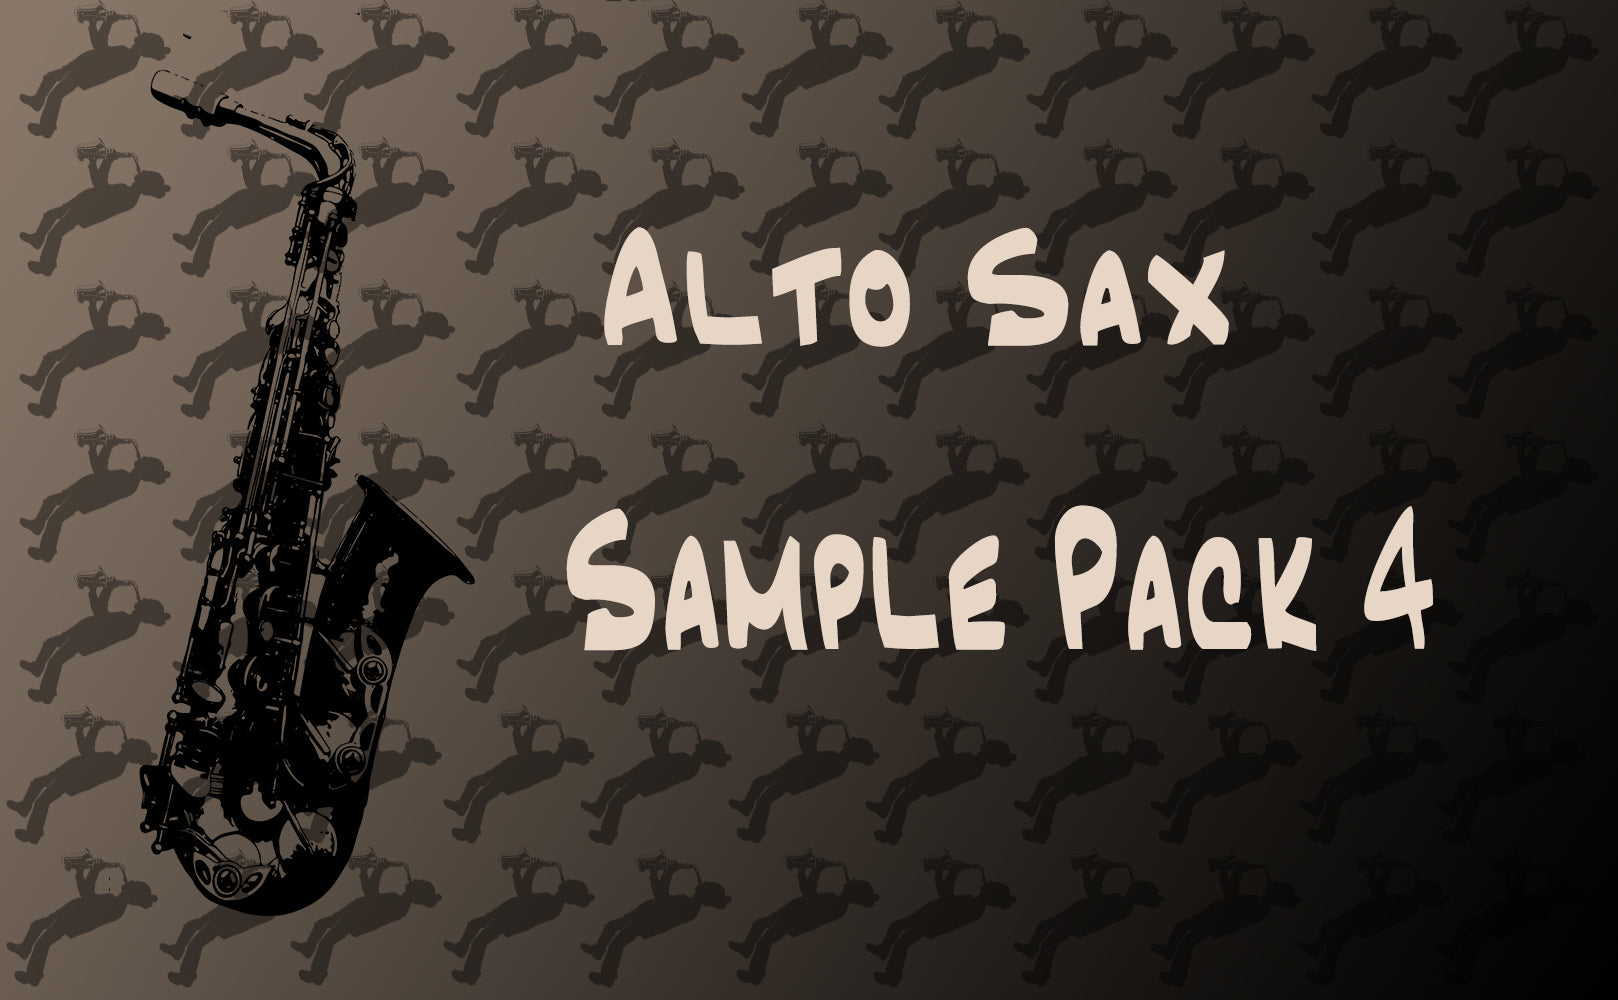 Alto Sax Sample pack 4 - Click to Listen